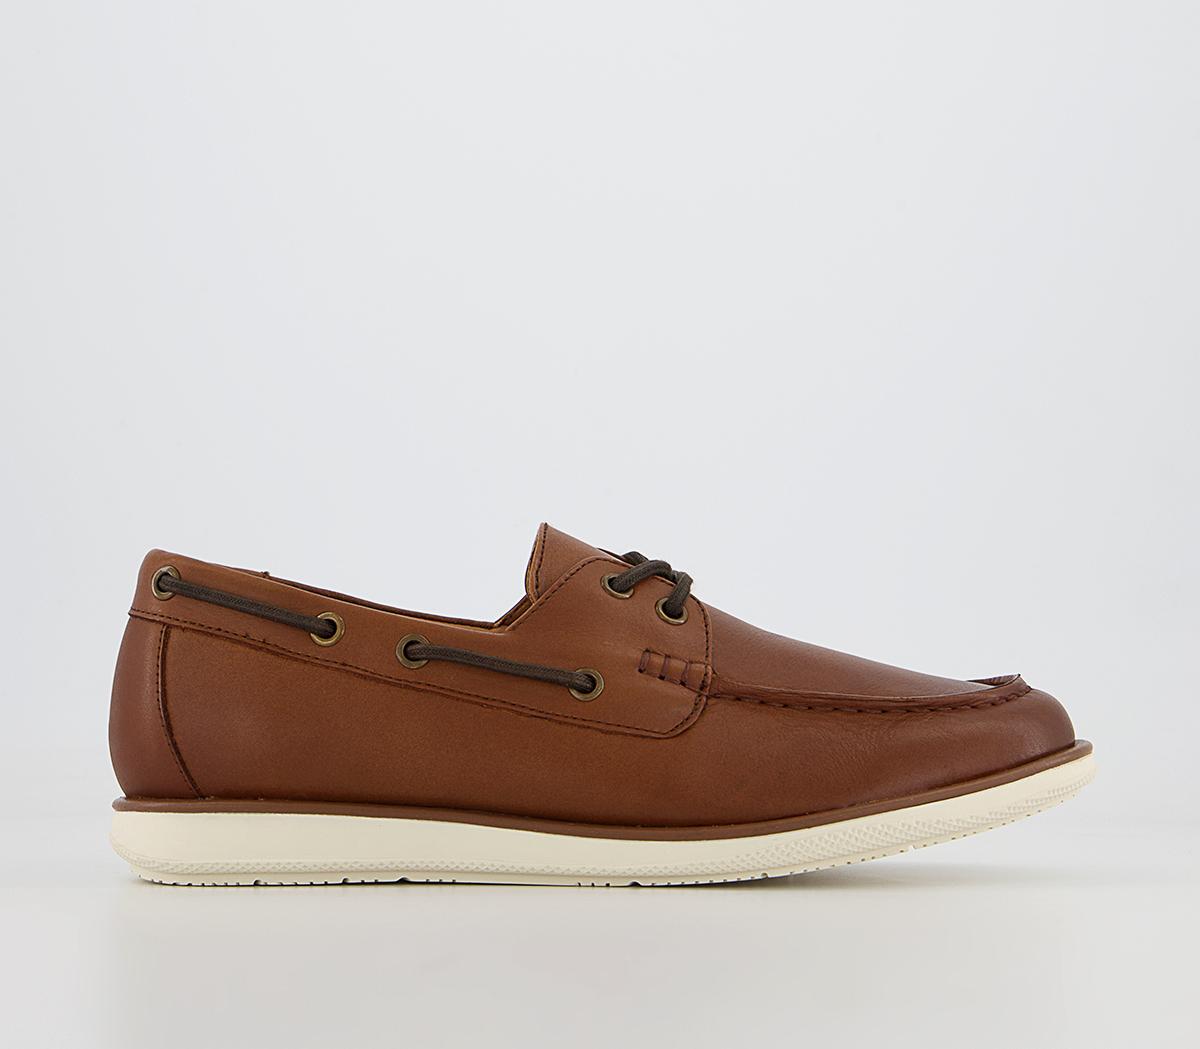 OFFICECarlow Premium Boat ShoesTan Leather